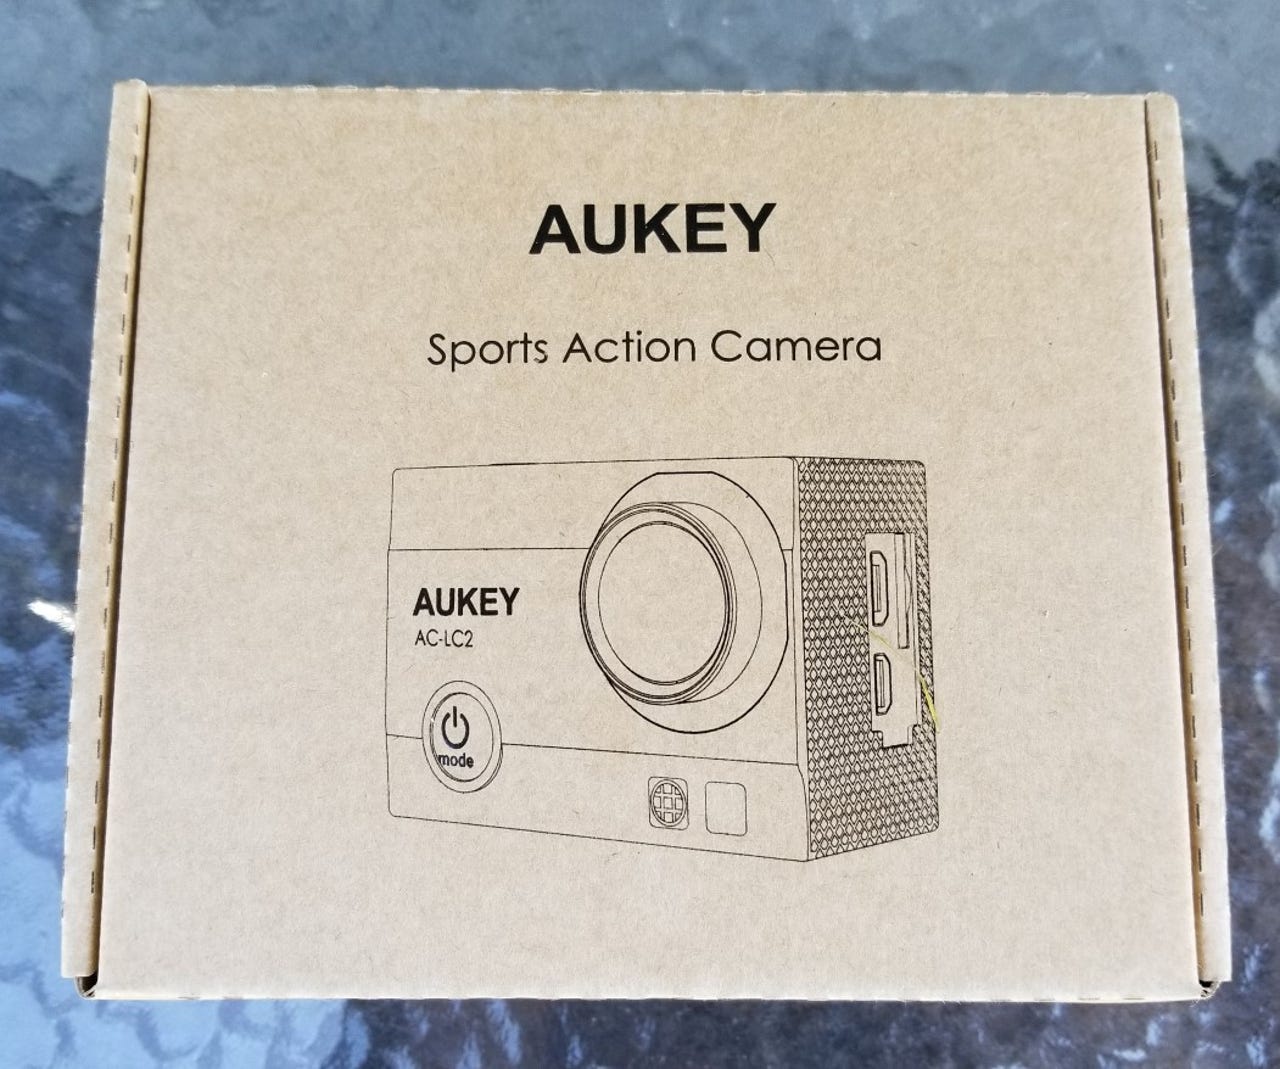 aukey-action-camera-2.jpg